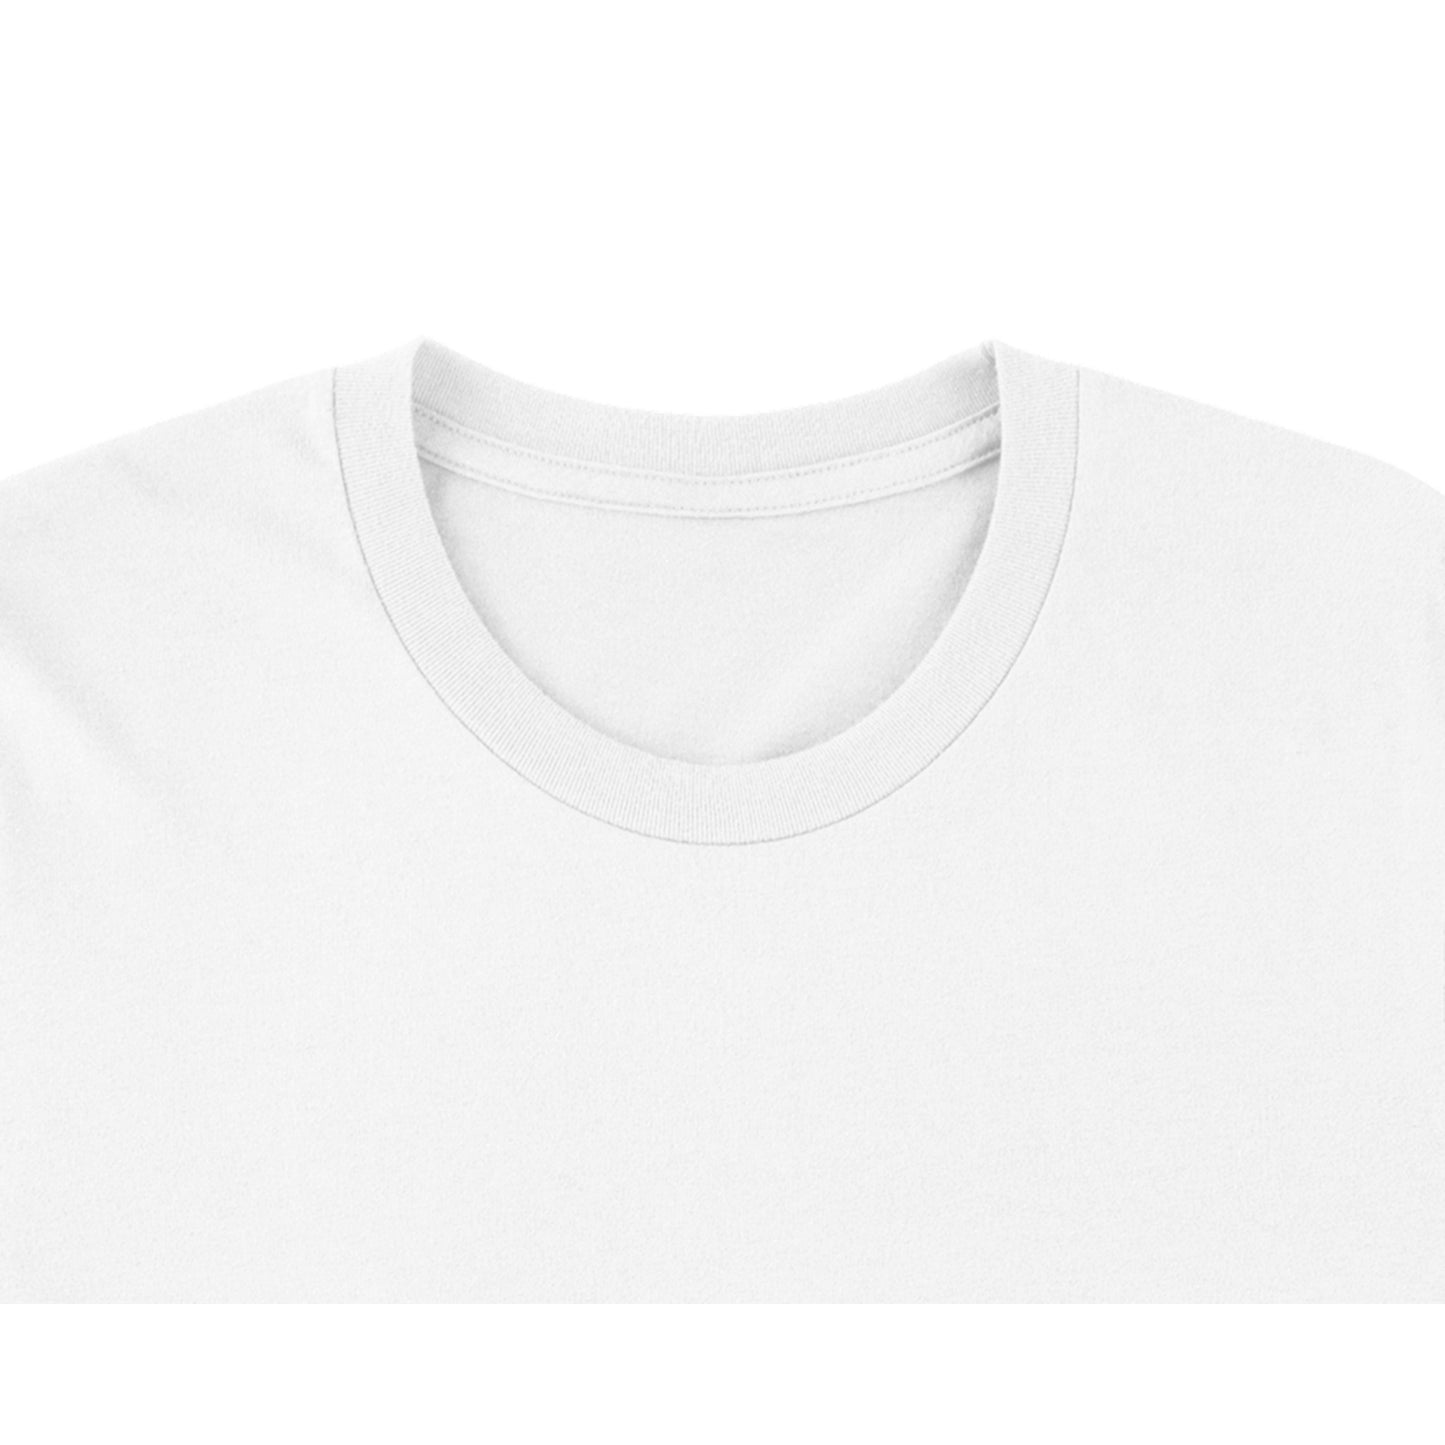 Good Thing's Take Time, I'm a Thing :  Premium Unisex Crewneck T-shirt